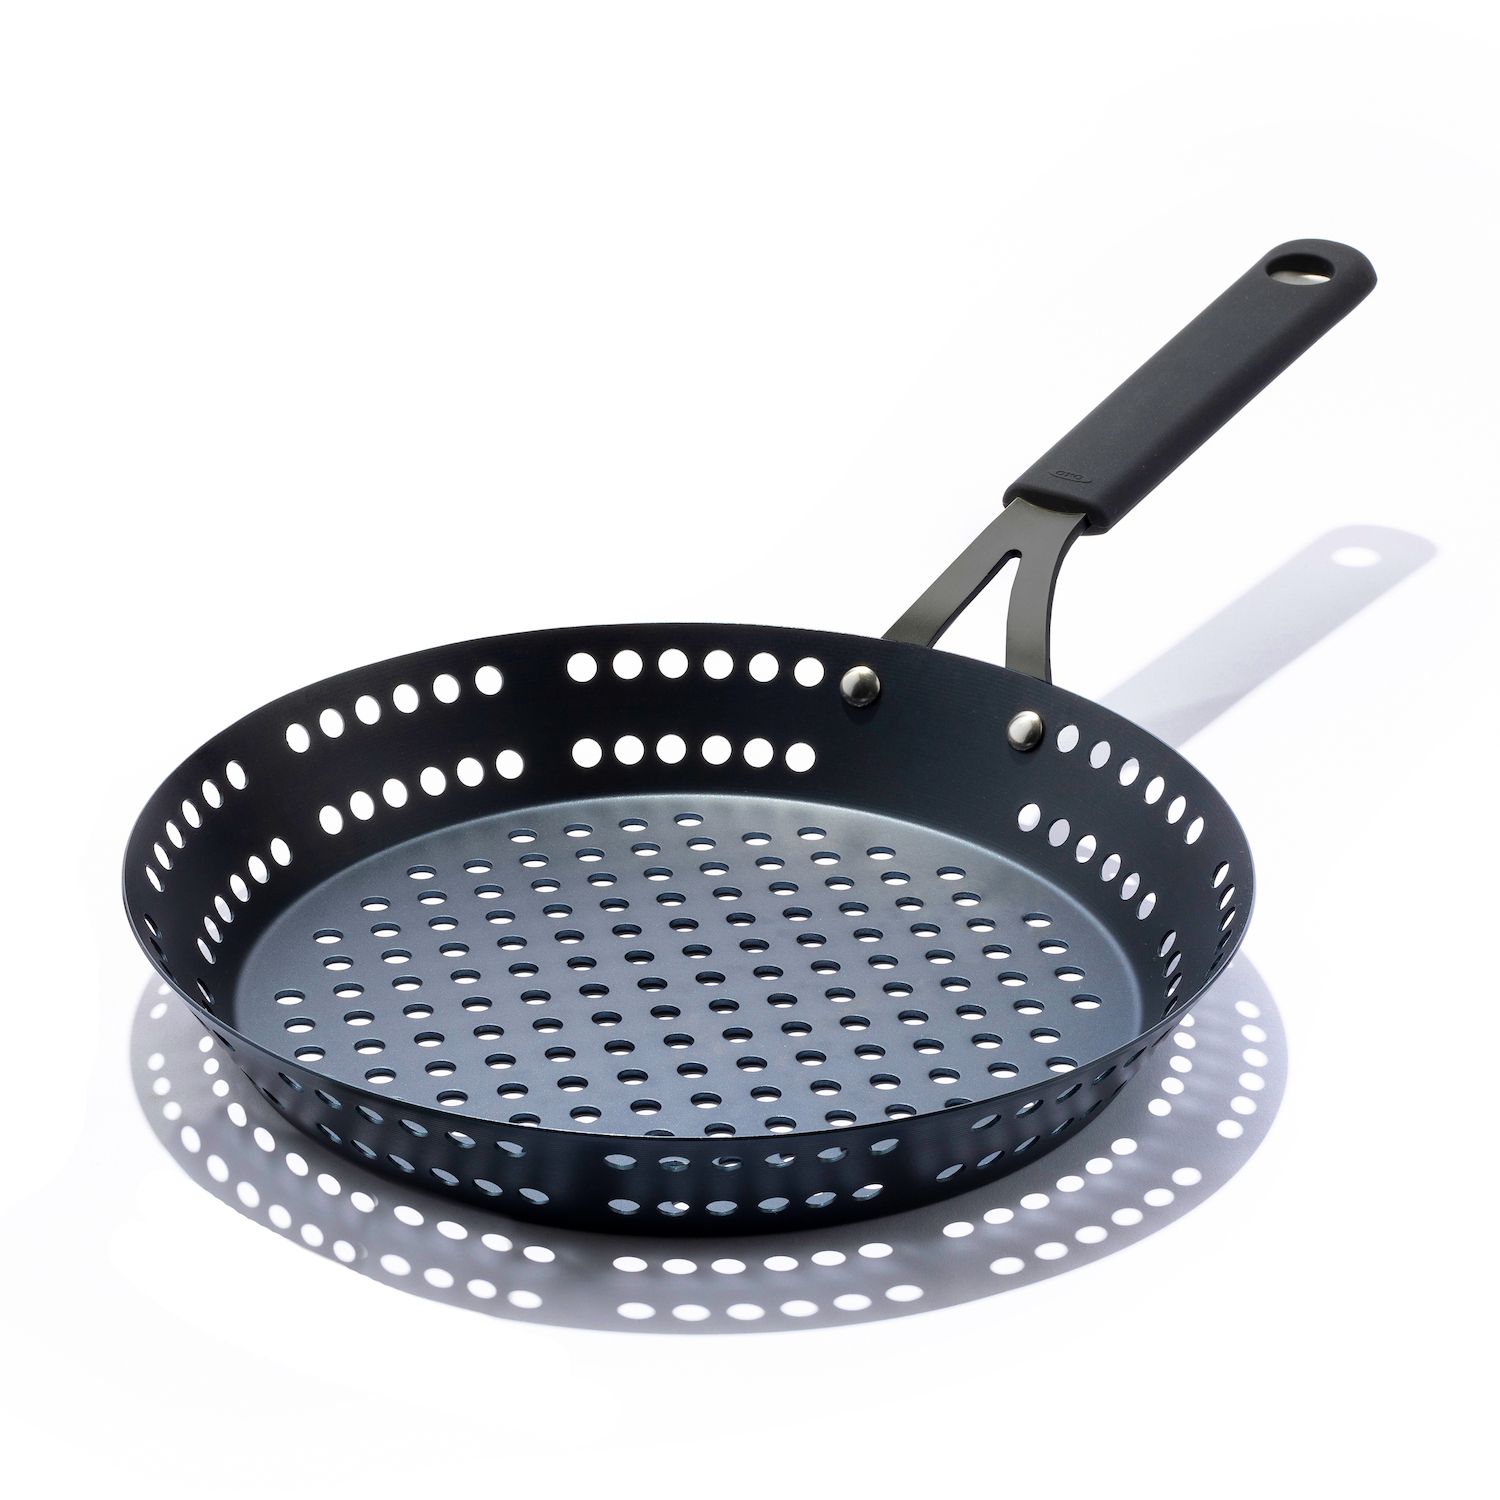 Alpine Cuisine Nonstick Round Paella Pan 13-Inch - Black Carbon Steel